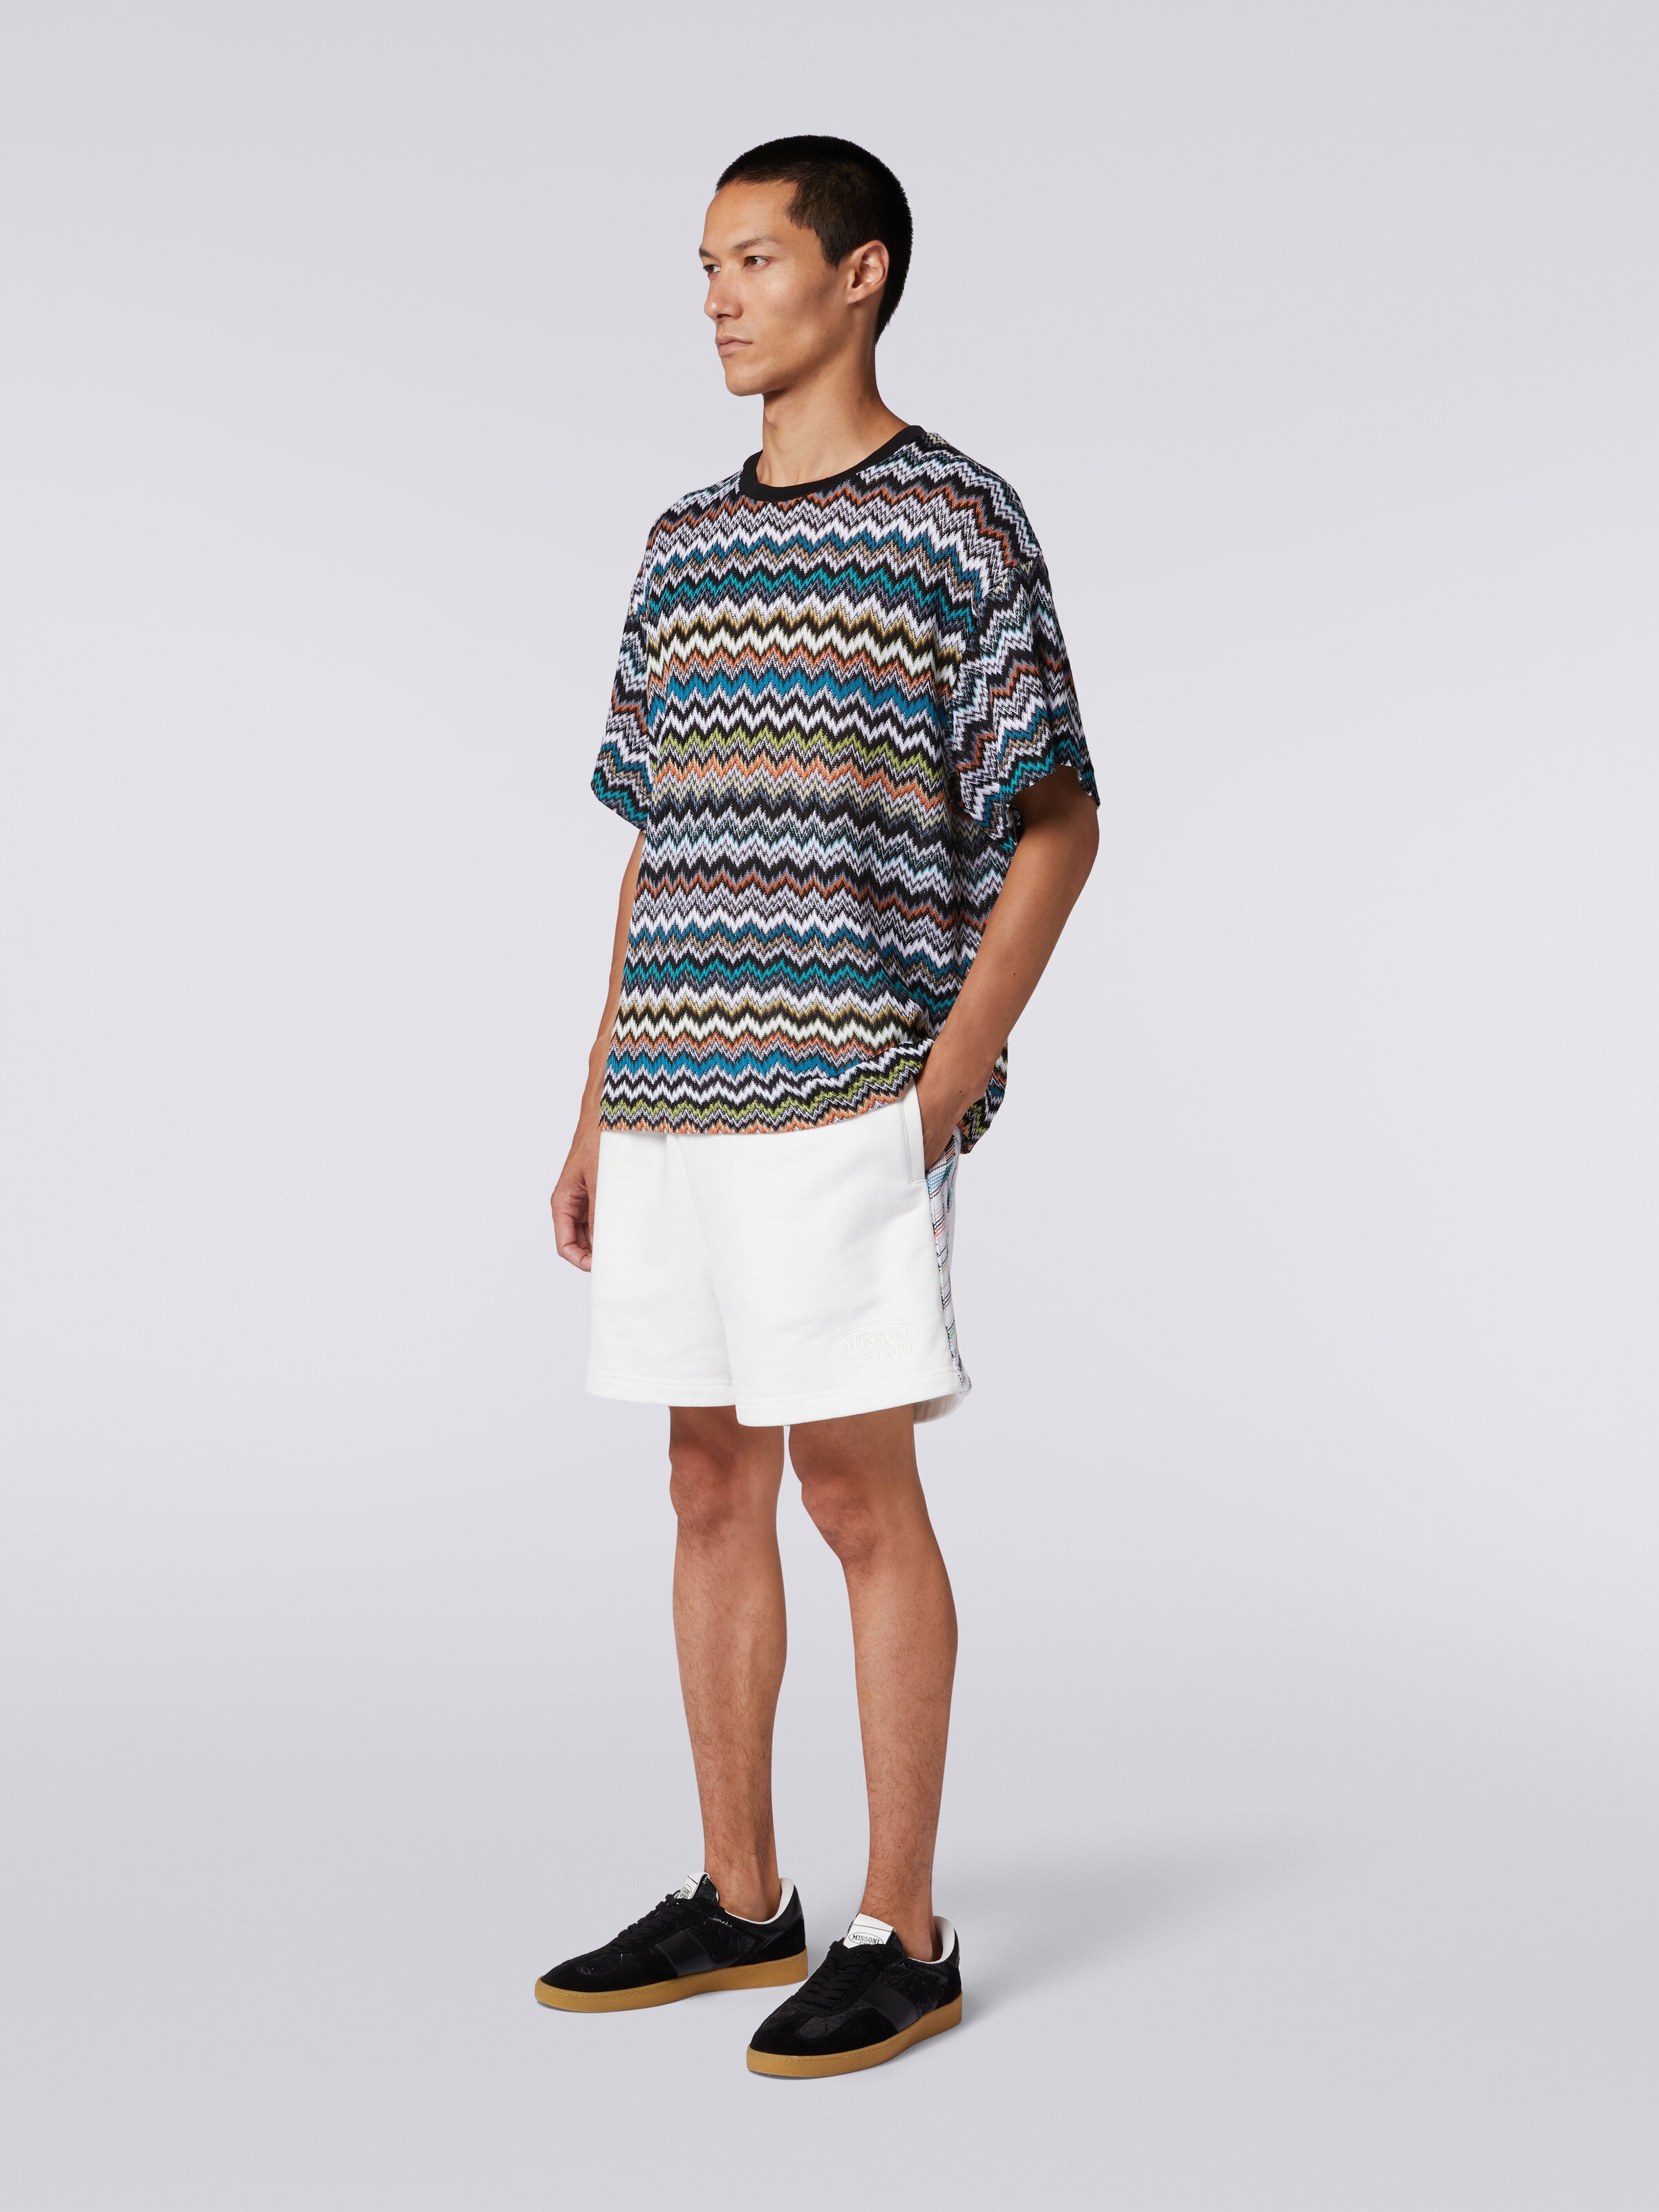 Crew-neck T-shirt in zigzag cotton knit, Multicoloured  - 2